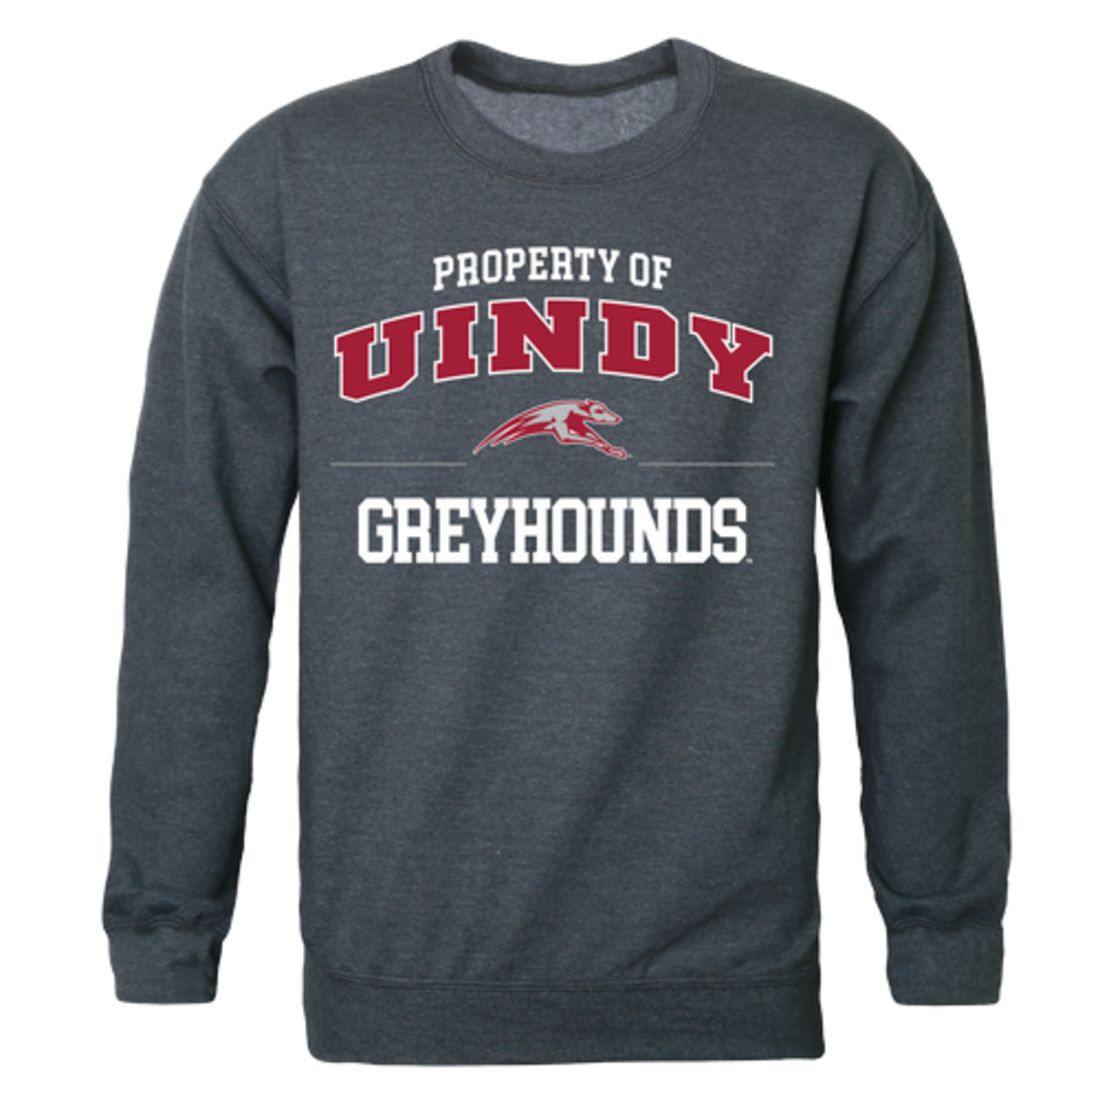 UIndy University of Indianapolis Greyhounds Property Crewneck Pullover Sweatshirt Sweater Heather Charcoal-Campus-Wardrobe